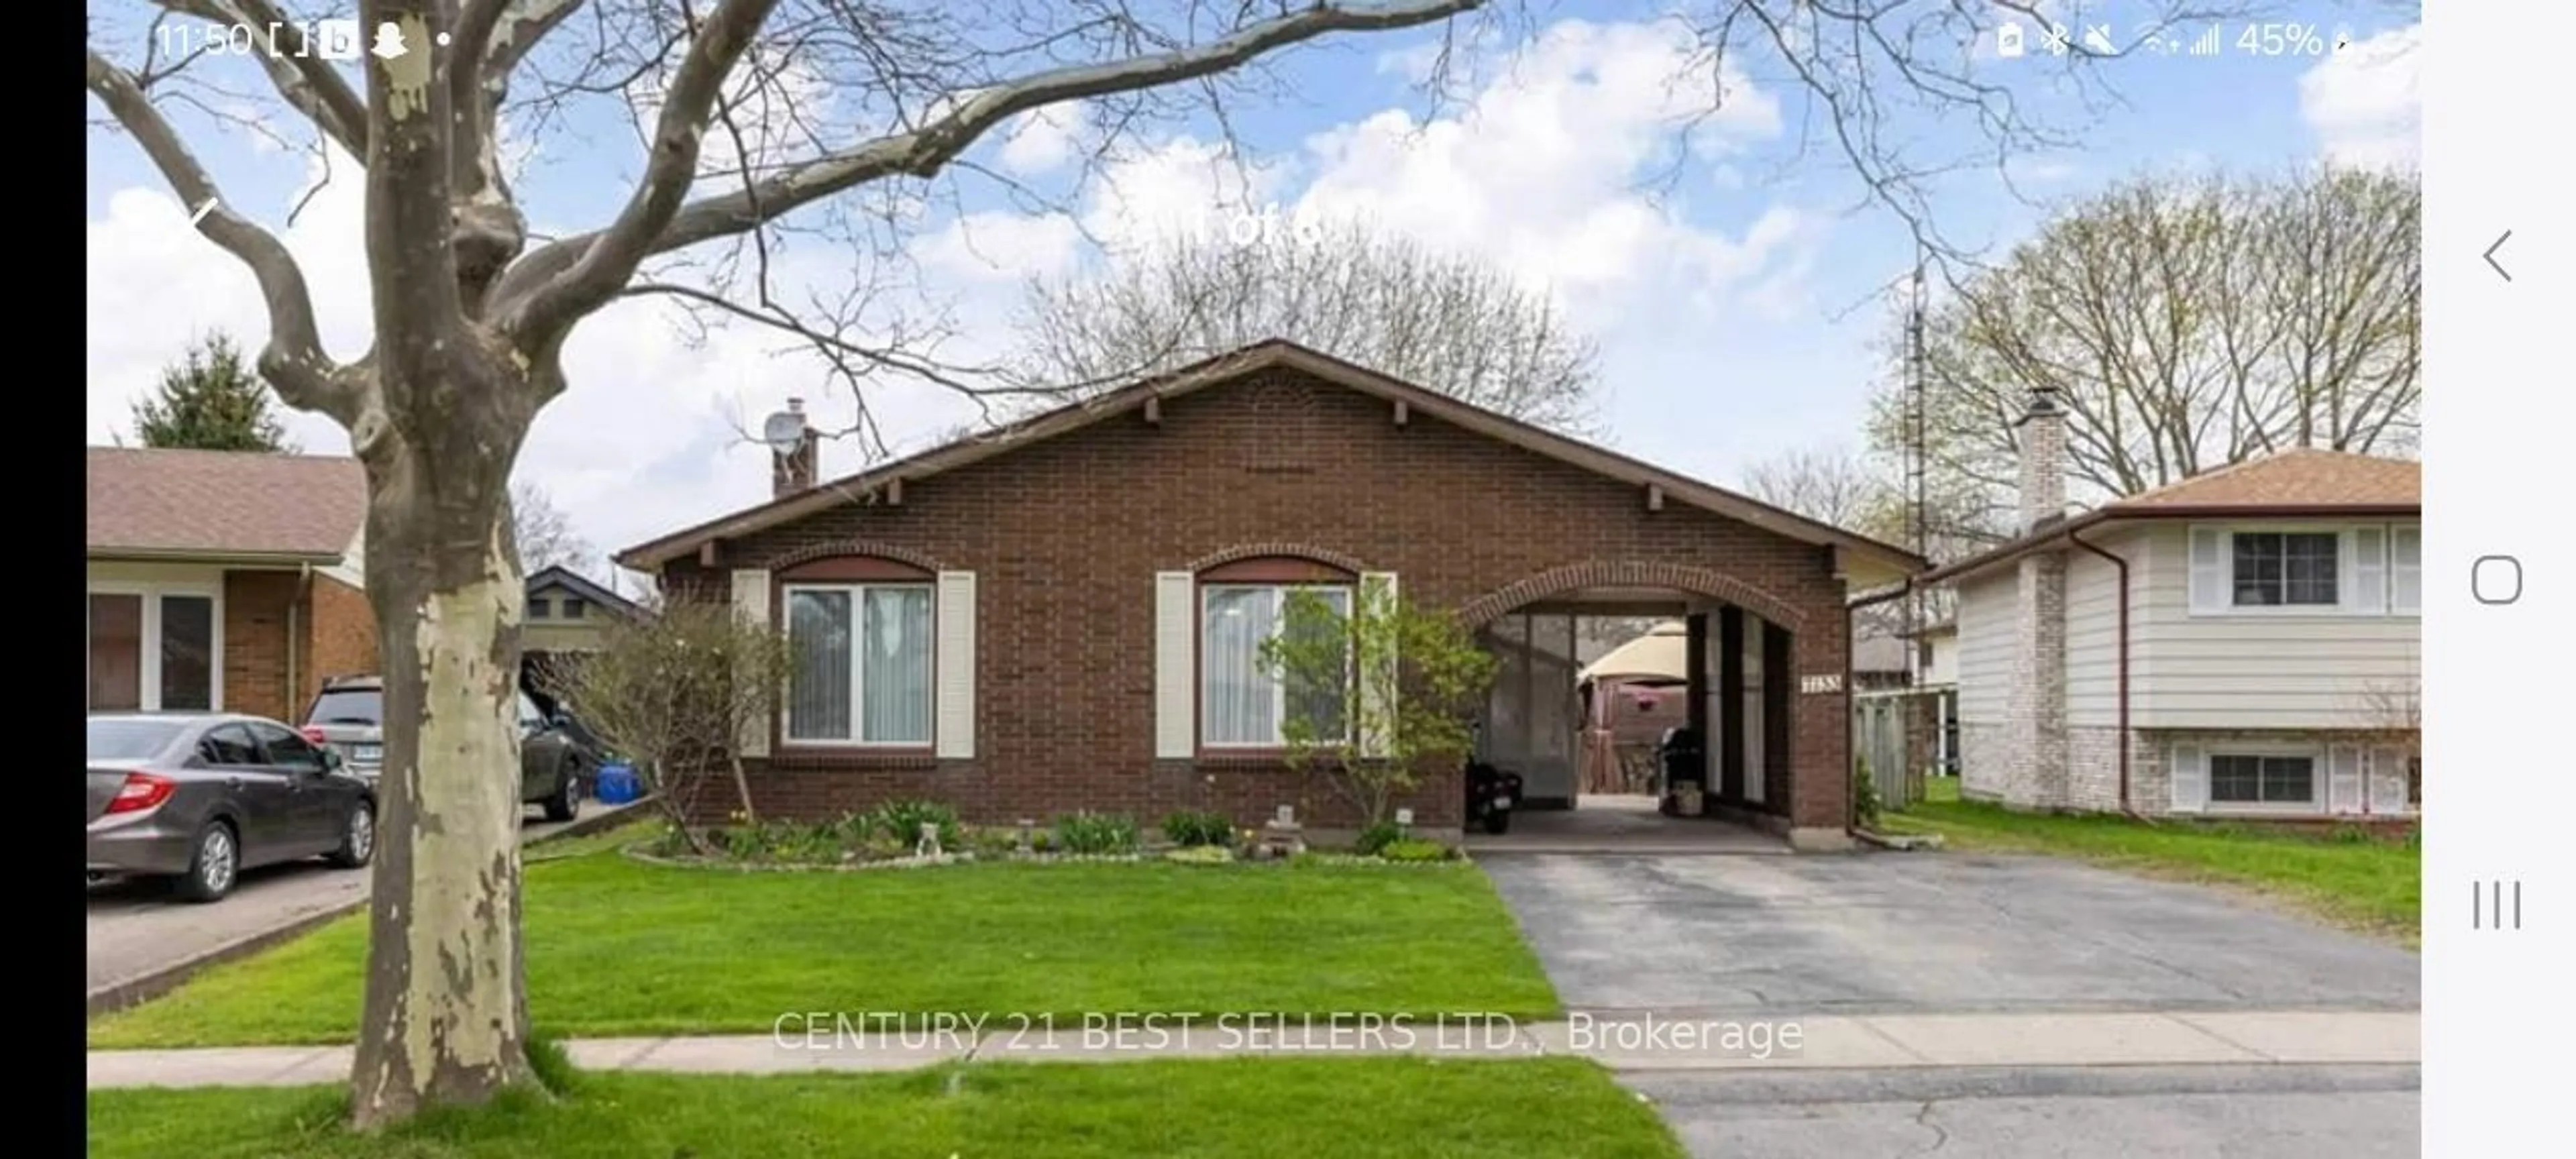 Home with brick exterior material for 7133 Maywood St, Niagara Falls Ontario L2E 5P6